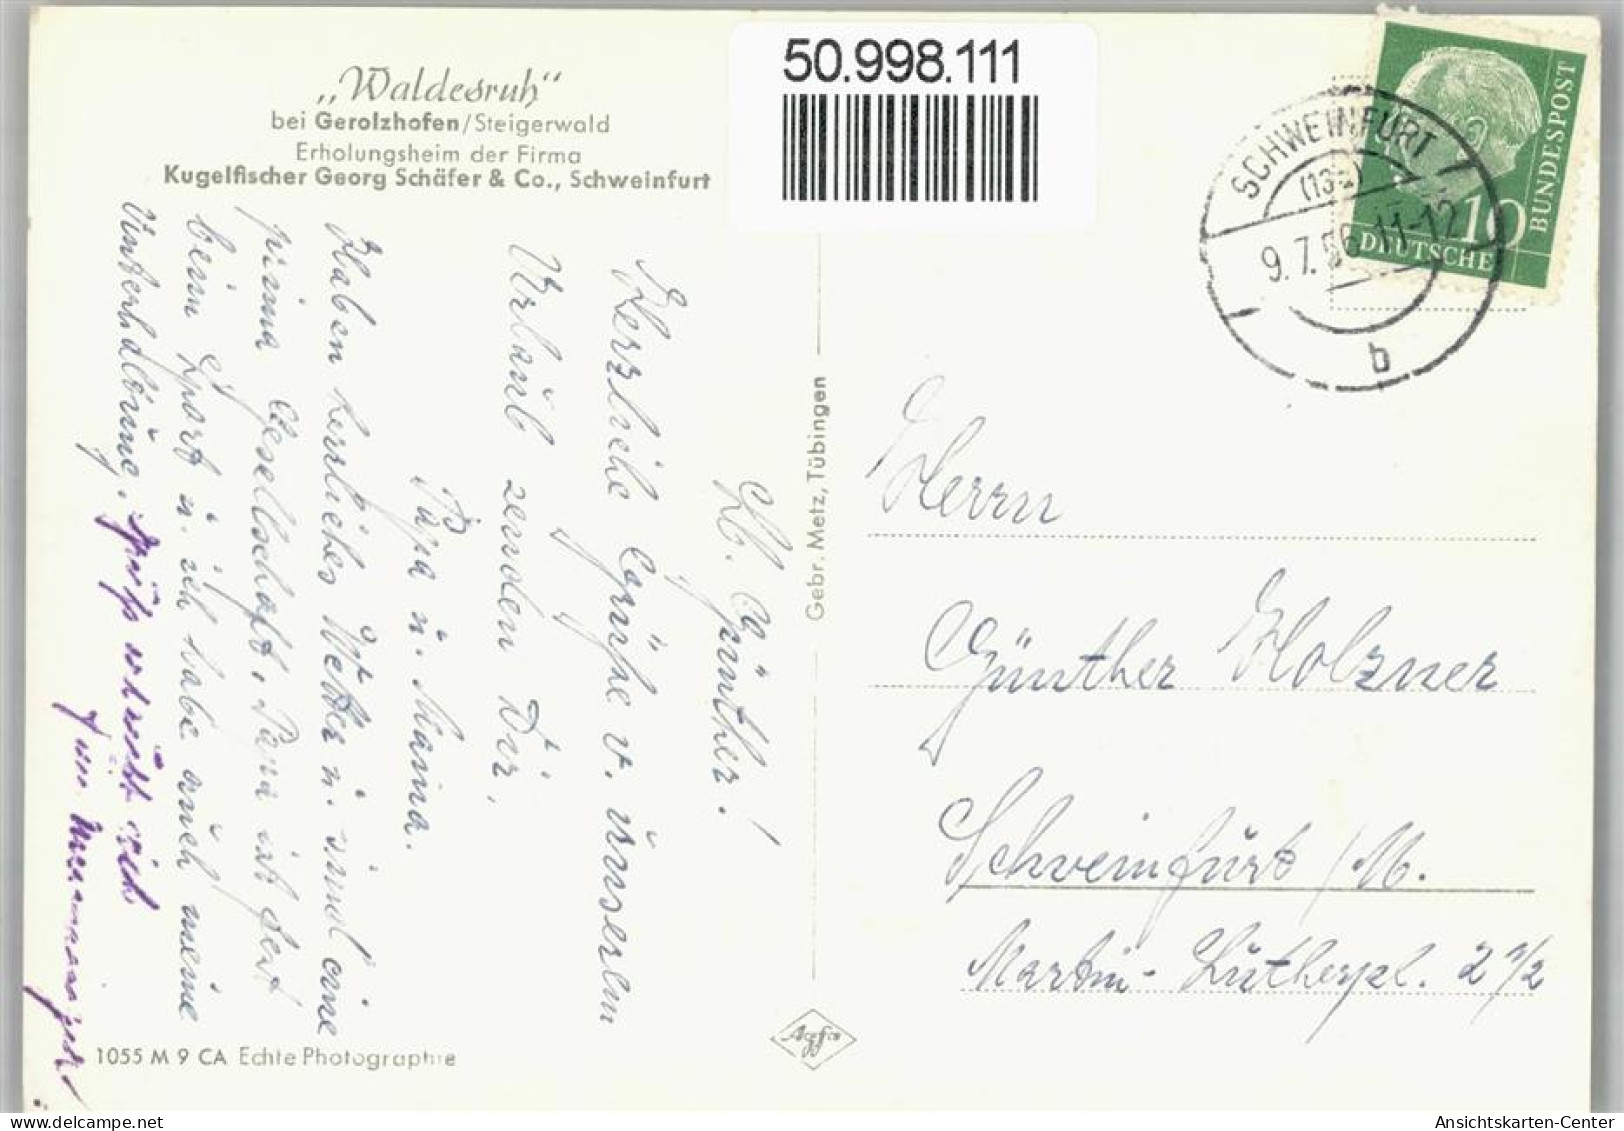 50998111 - Gerolzhofen - Gerolzhofen